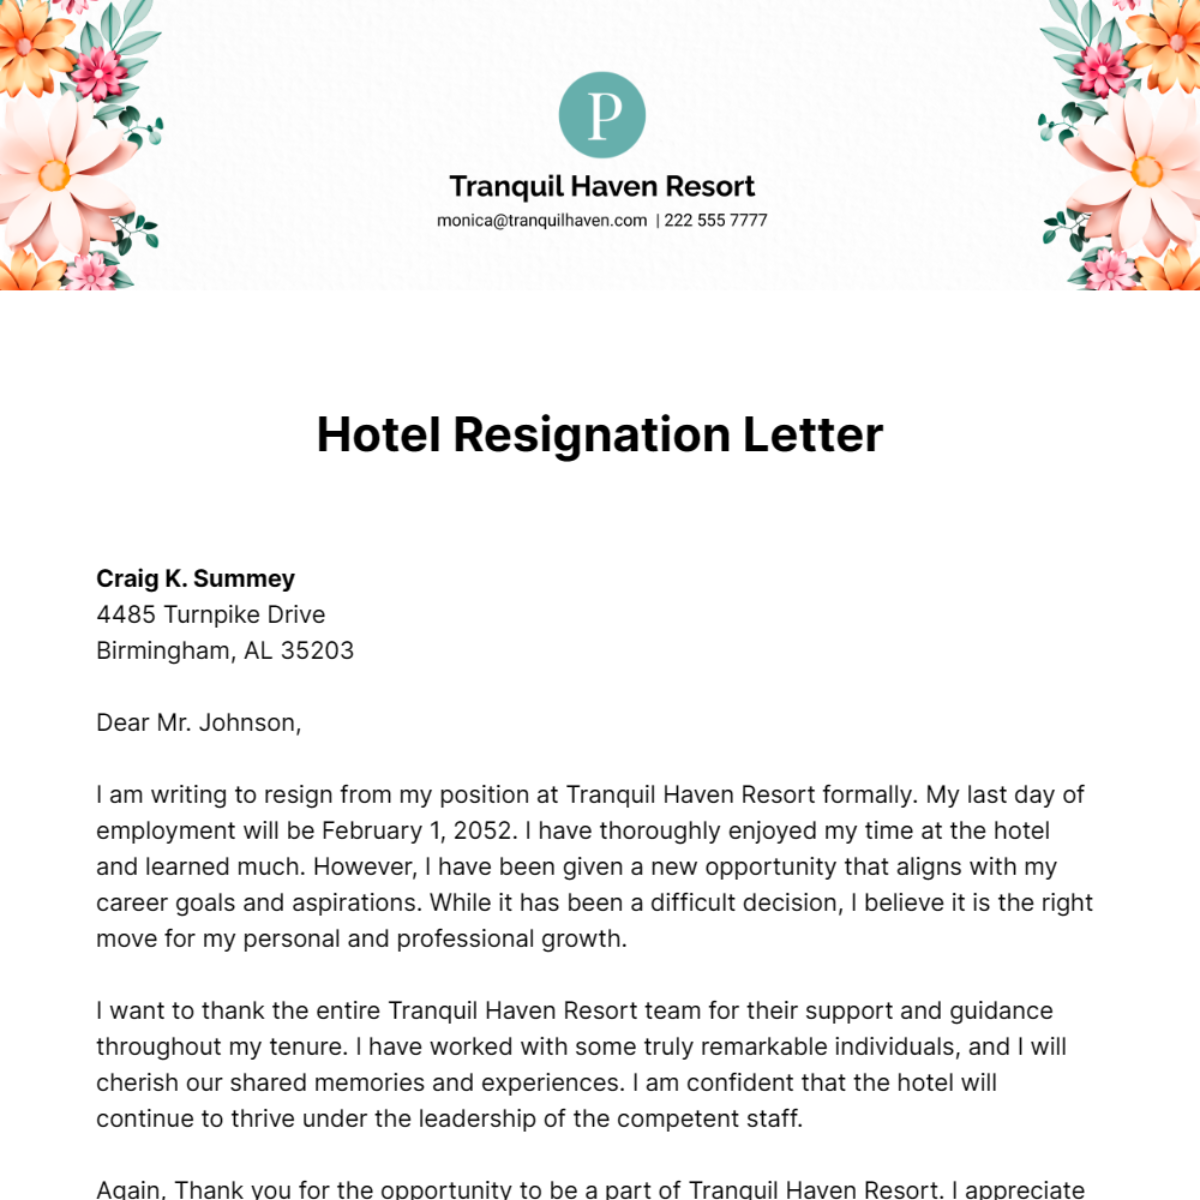 Hotel Resignation Letter Template